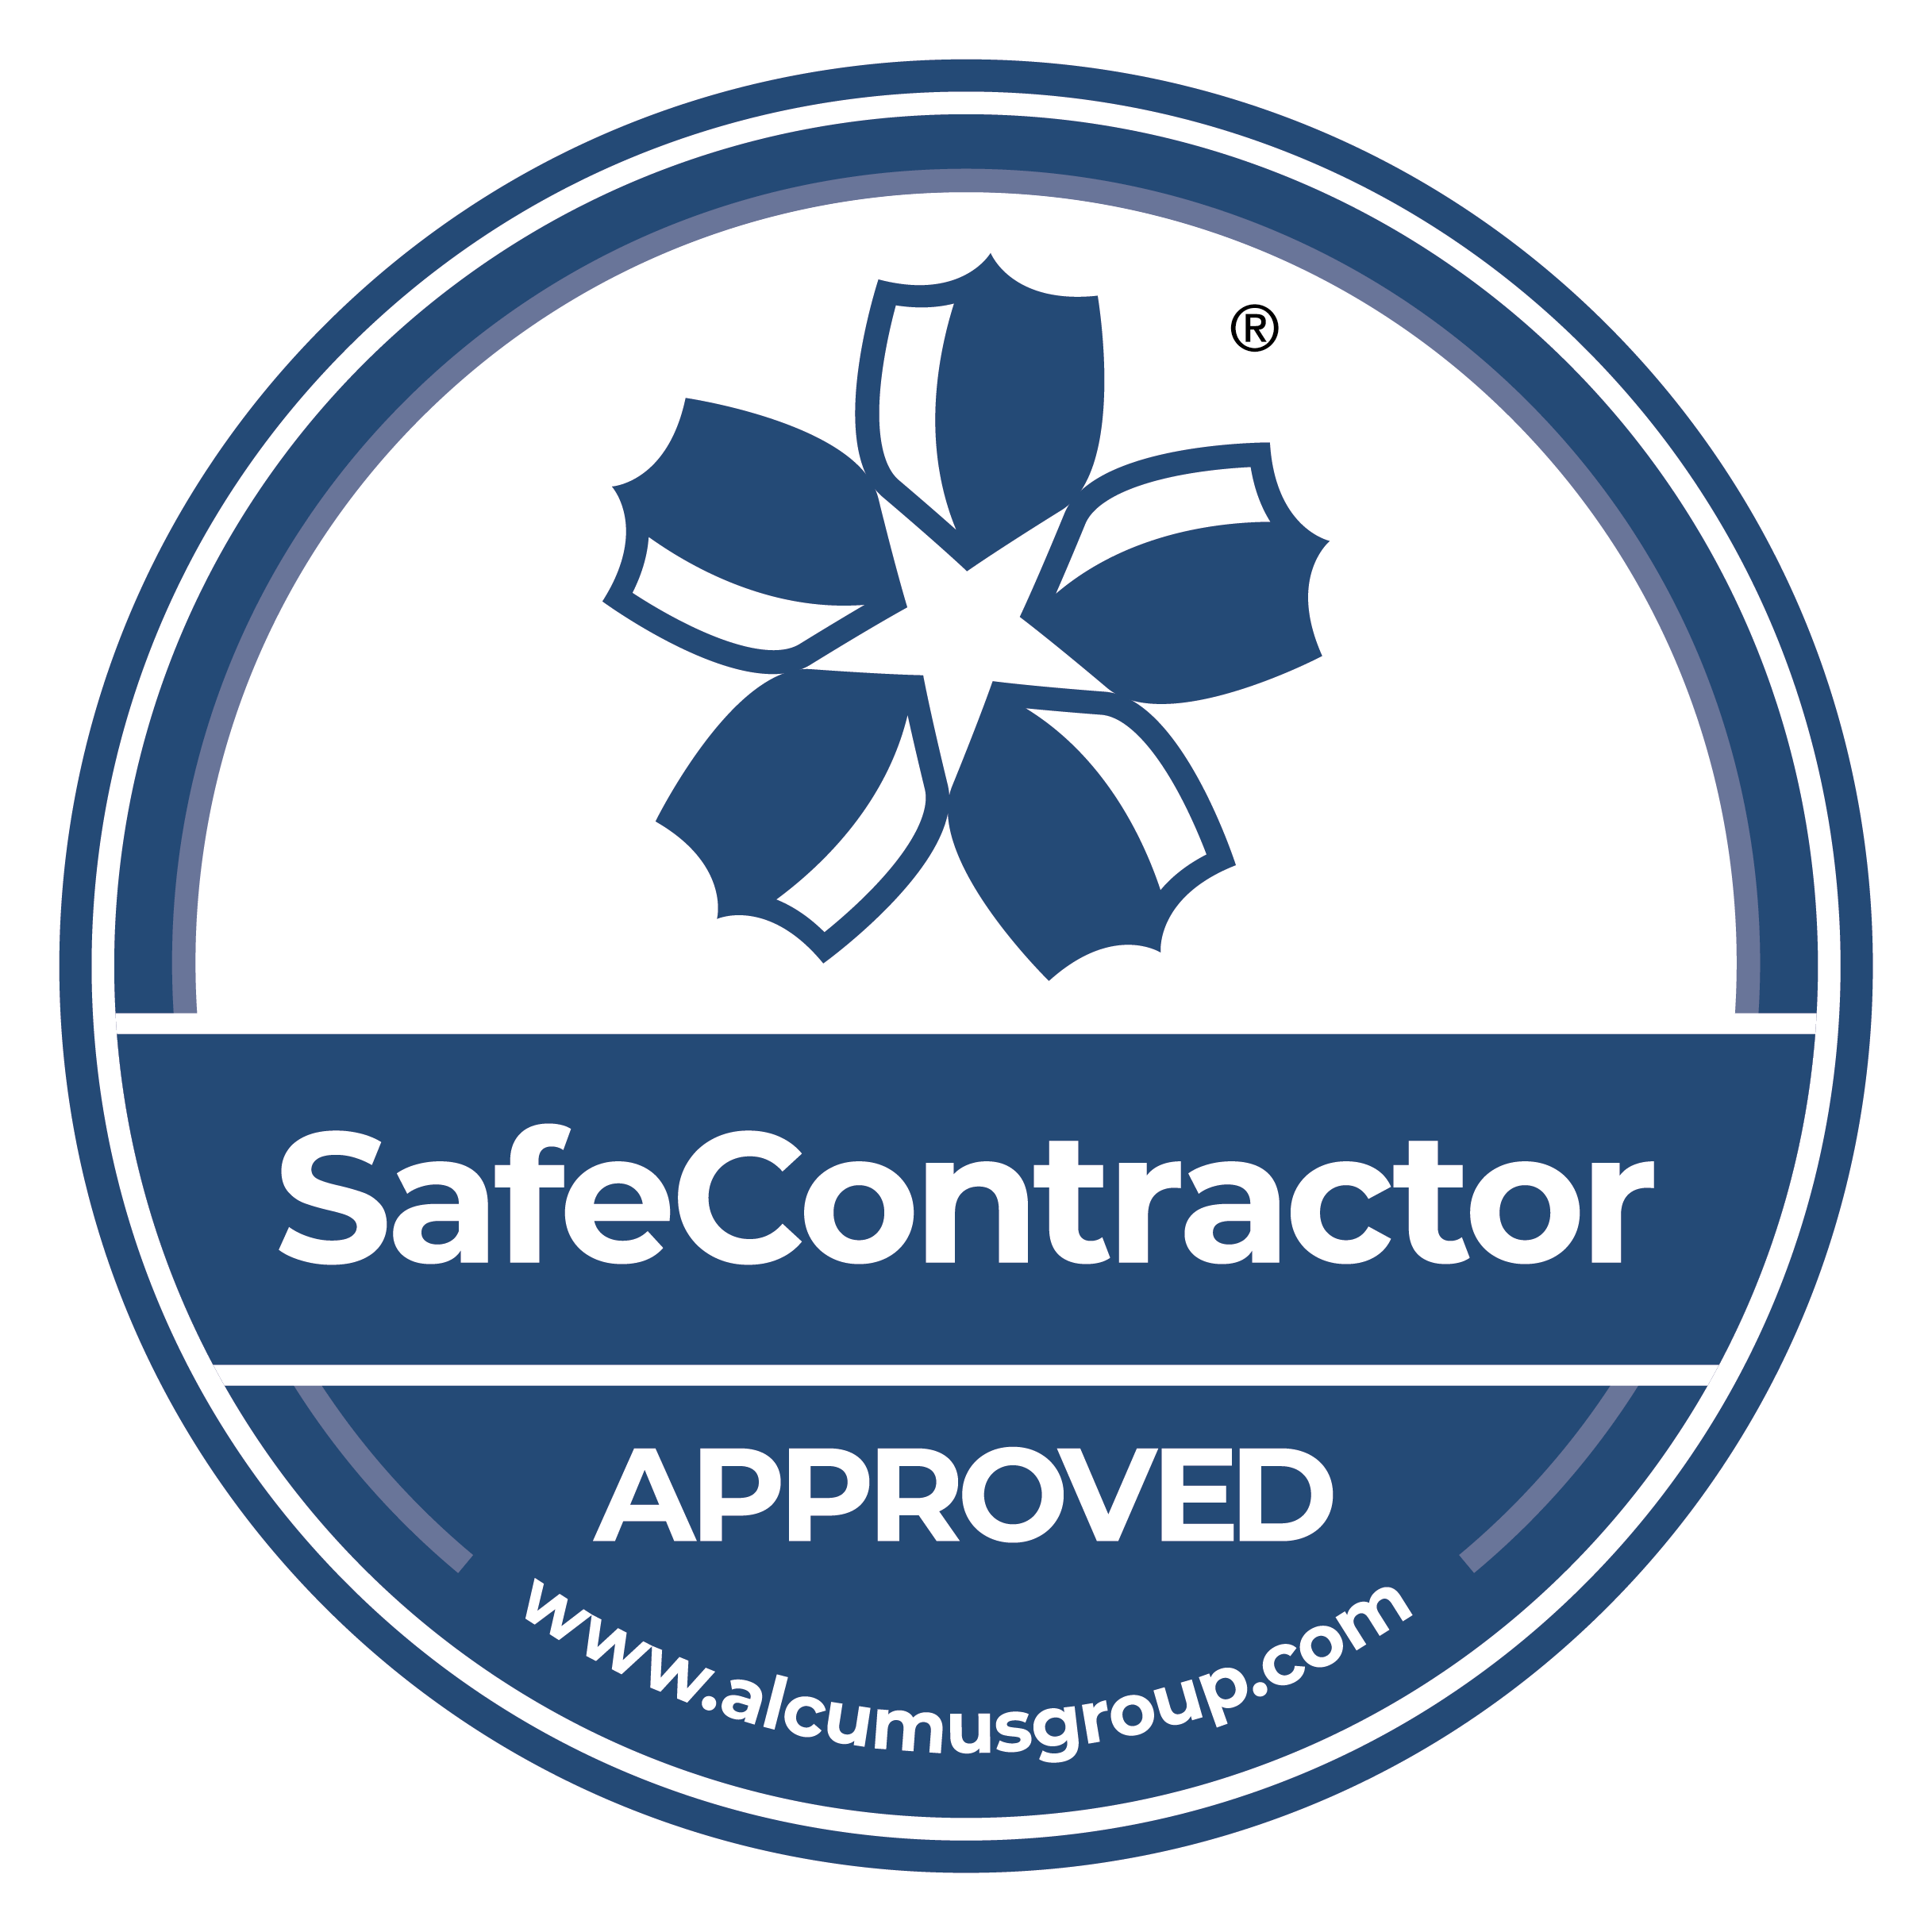 ERG's SafeContractor accreditation